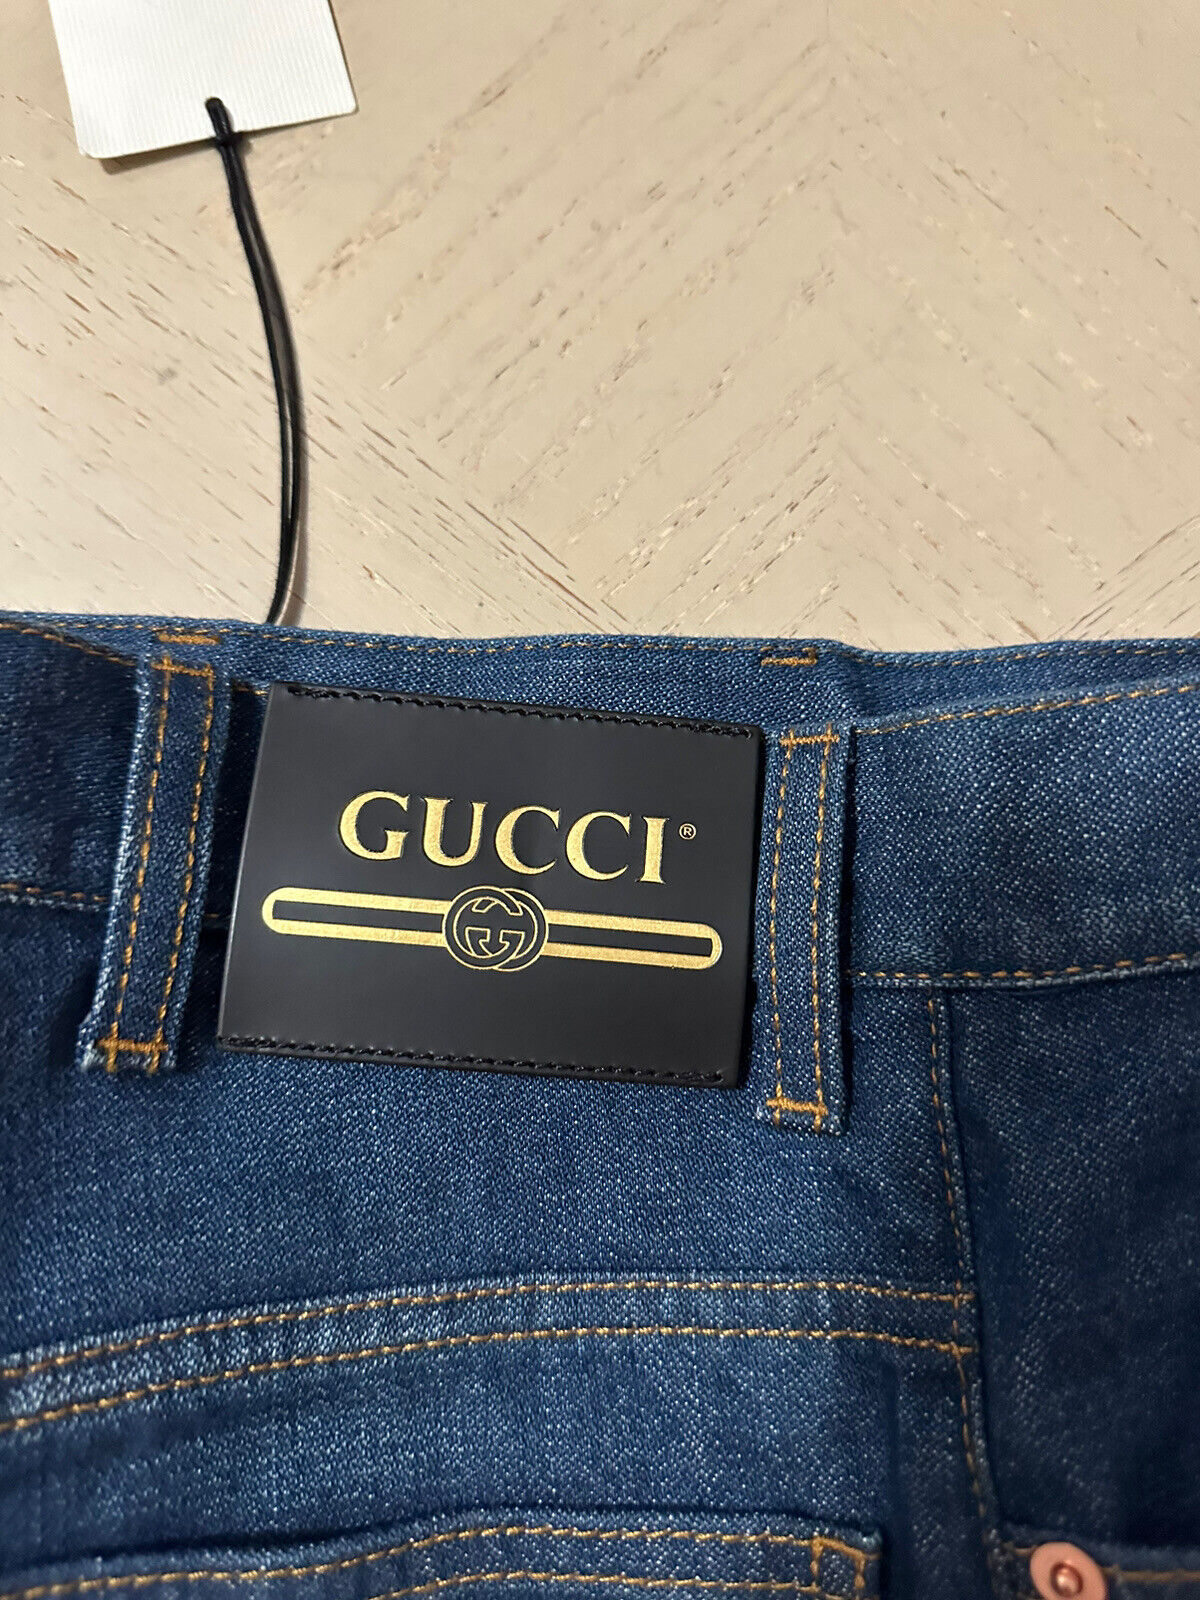 NWT $820 Gucci Men’s Jeans Denim Pants Blue 30 US Italy